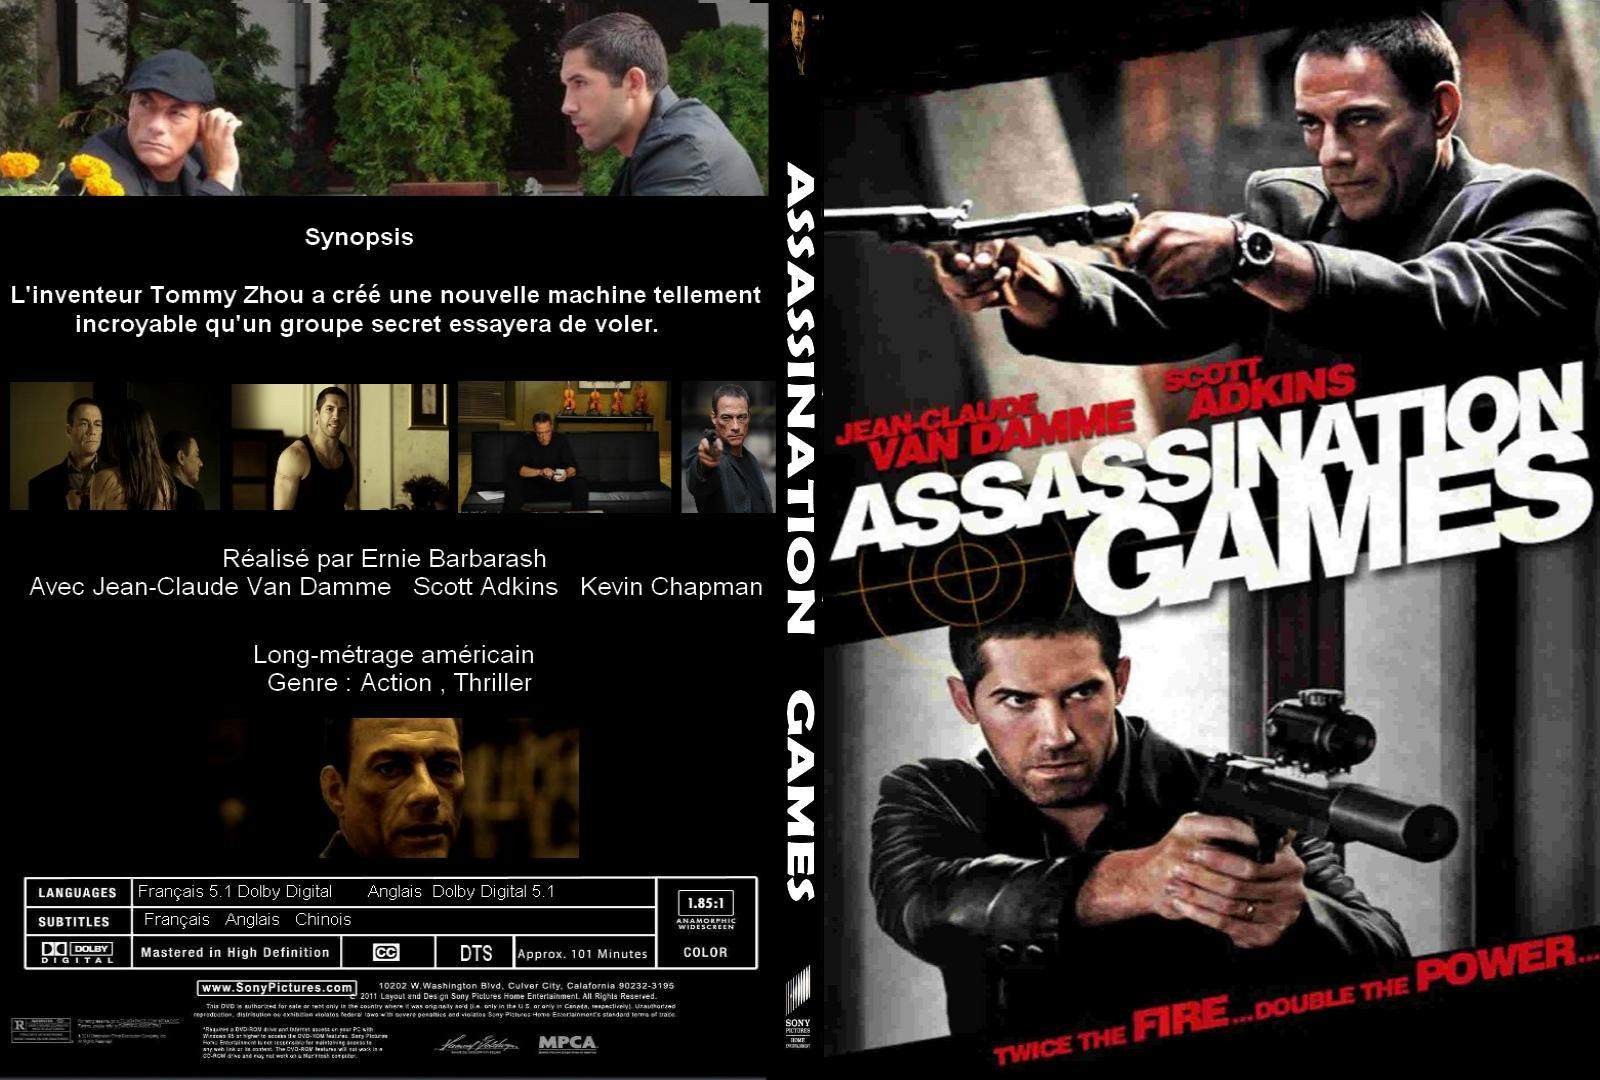 Jaquette DVD Assassination Games custom - SLIM